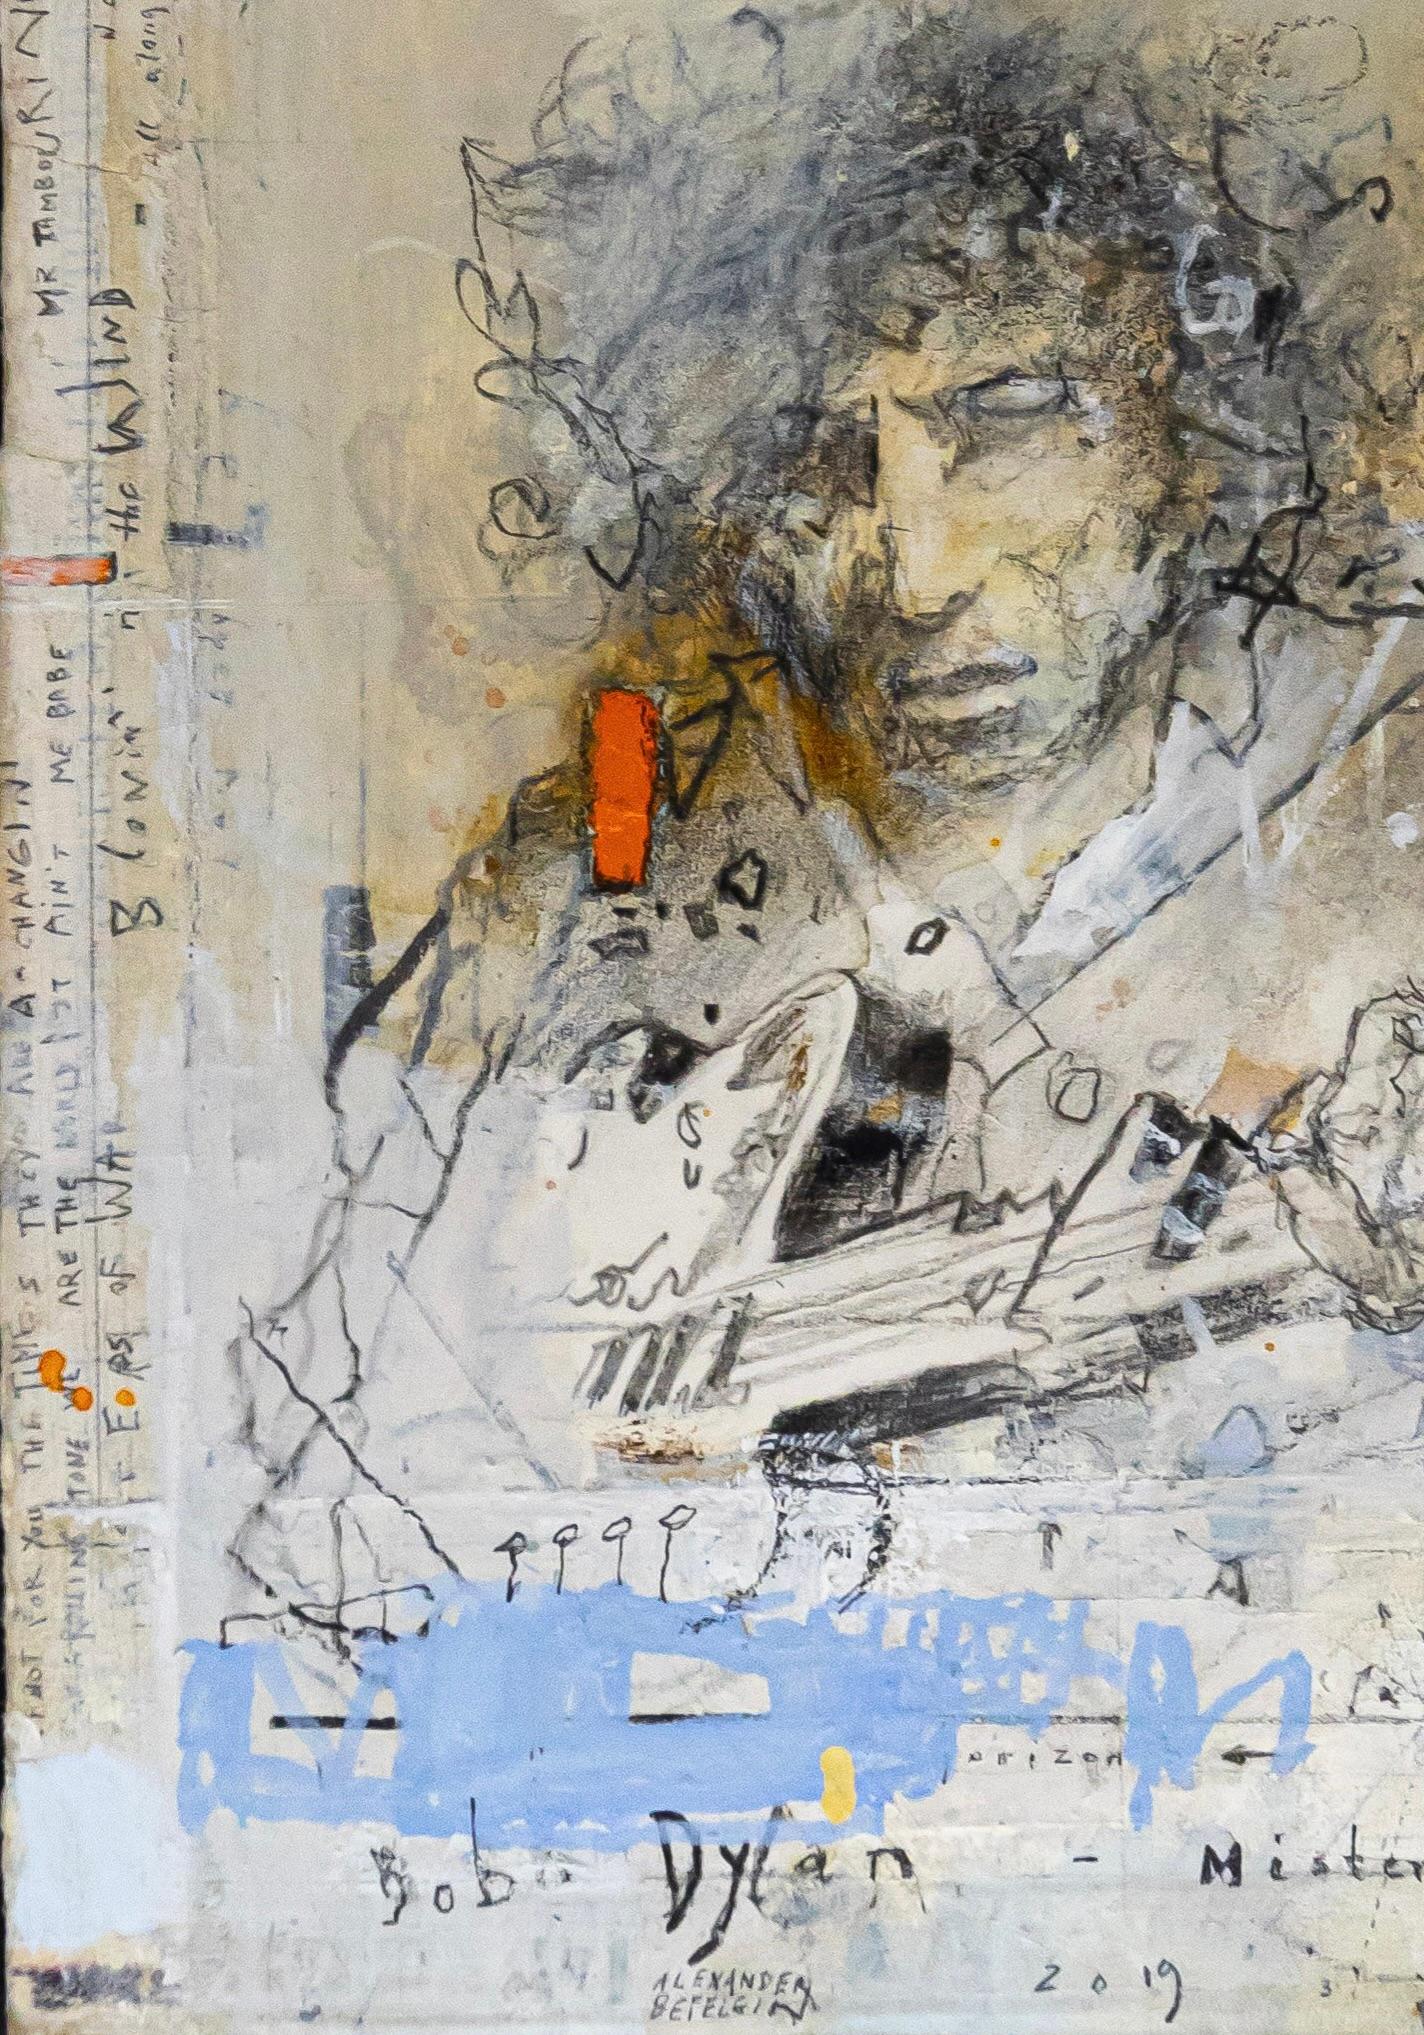 „Bob Dylan – Legenden“ Aquarell auf Papier 2019 – Musiker Gitarrenmusik im Angebot 1